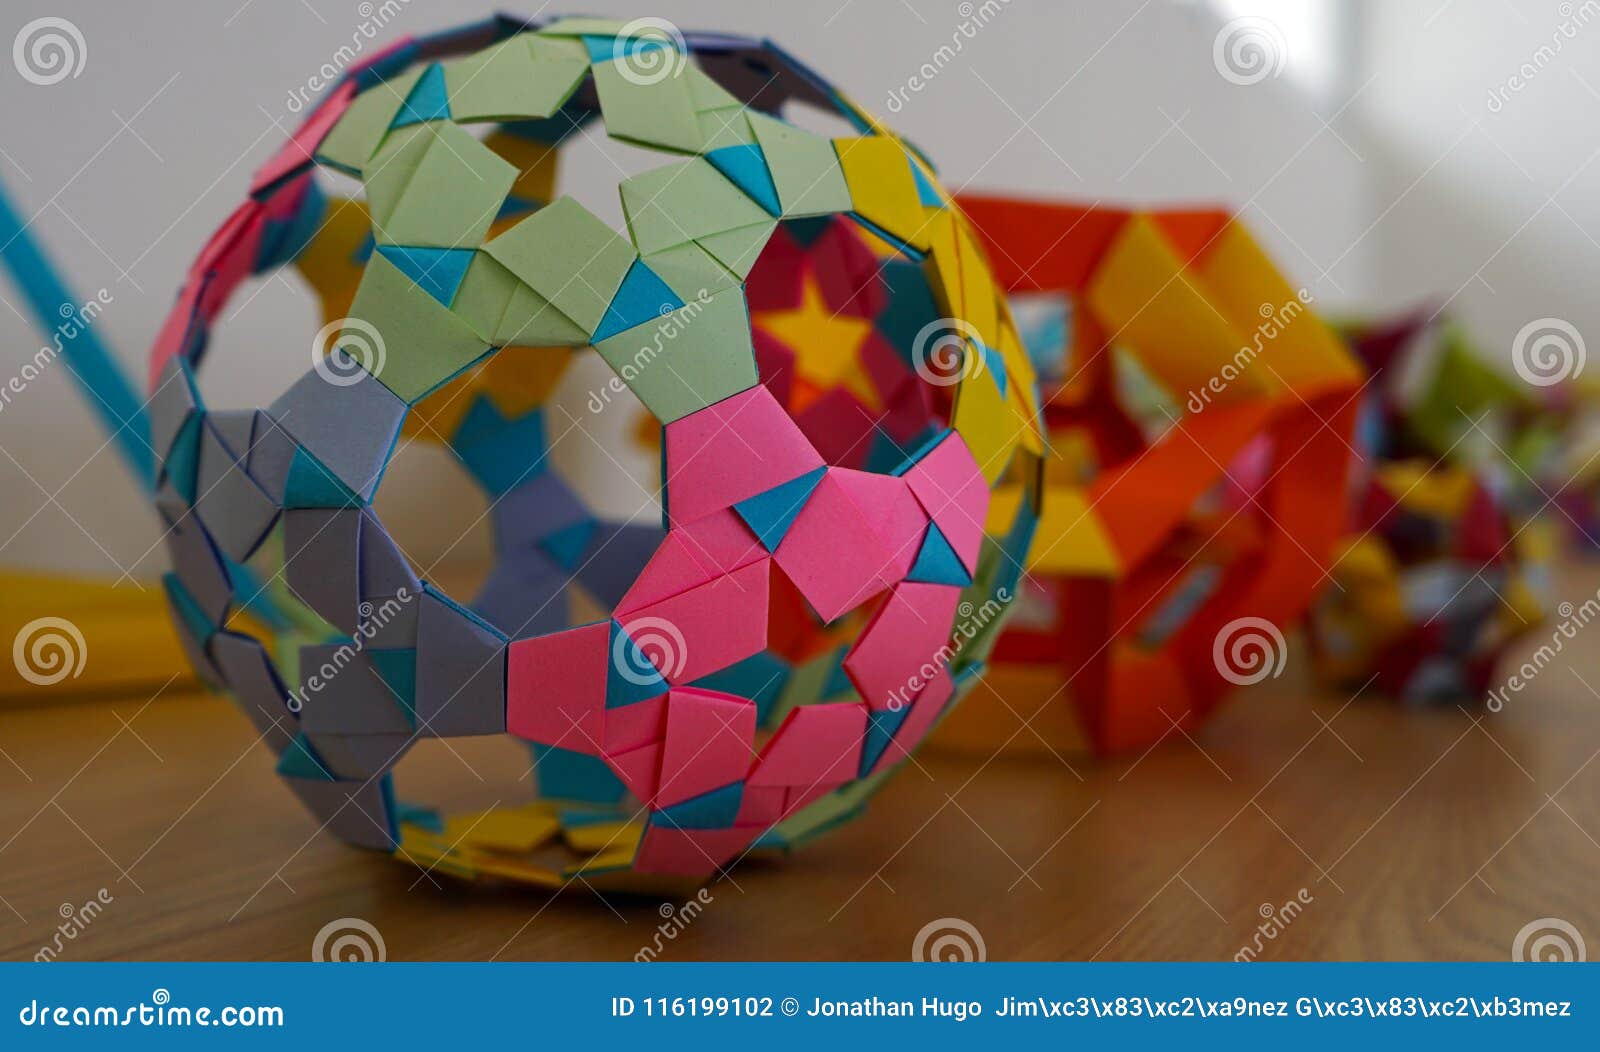 origami ball and geometries